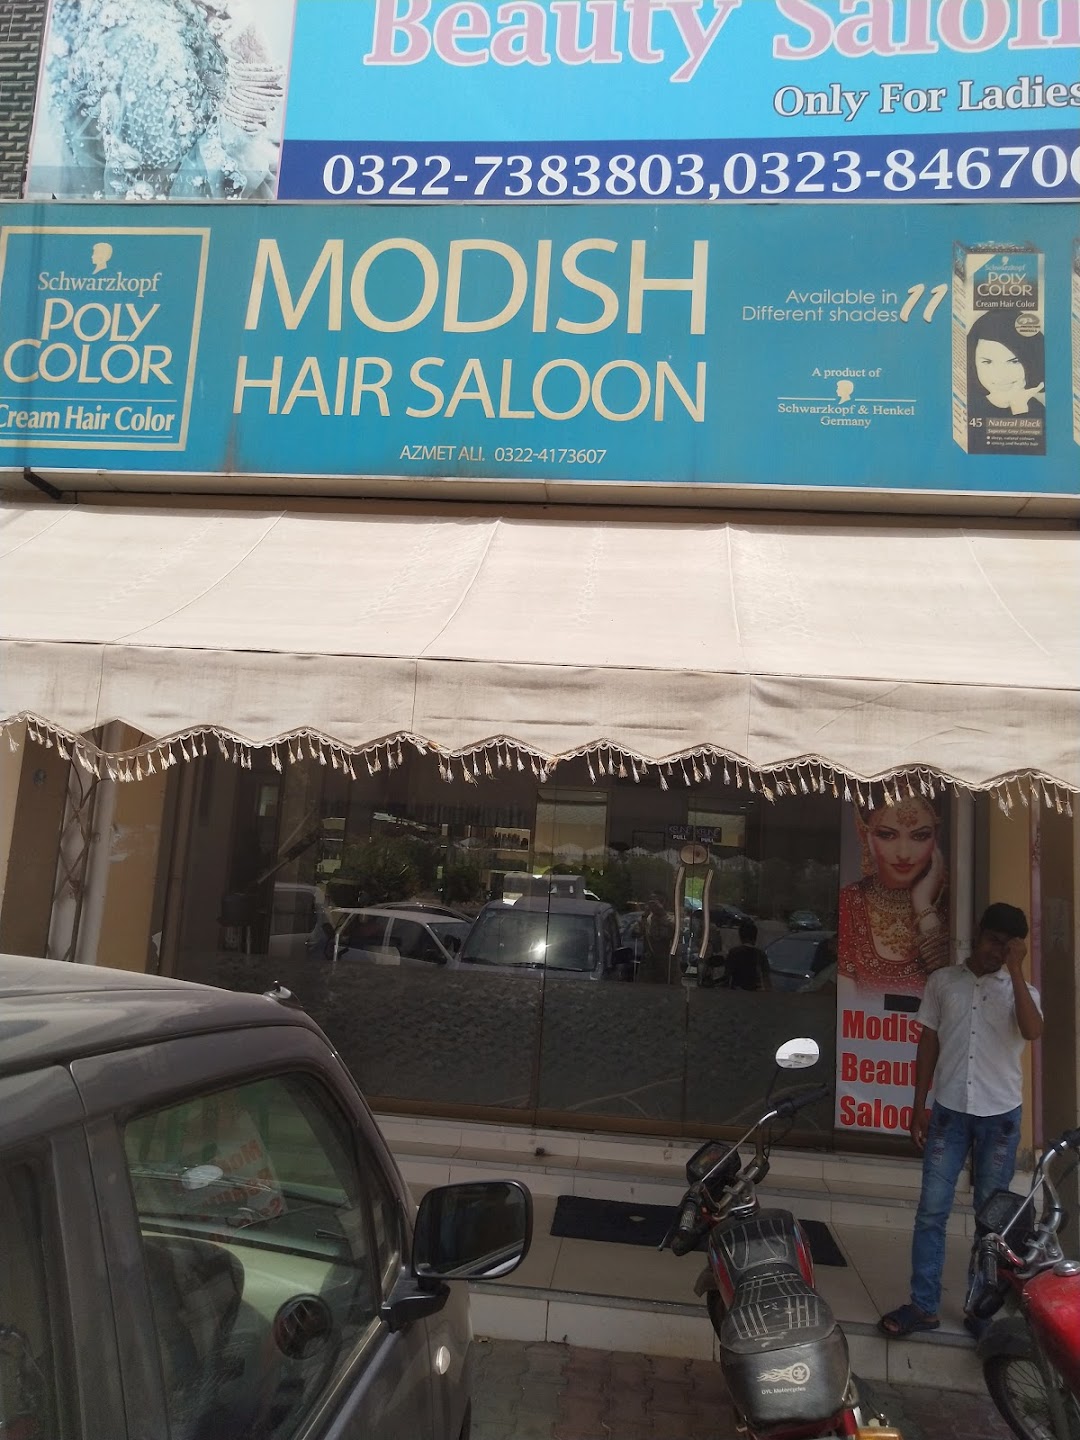 Modish hair saloon